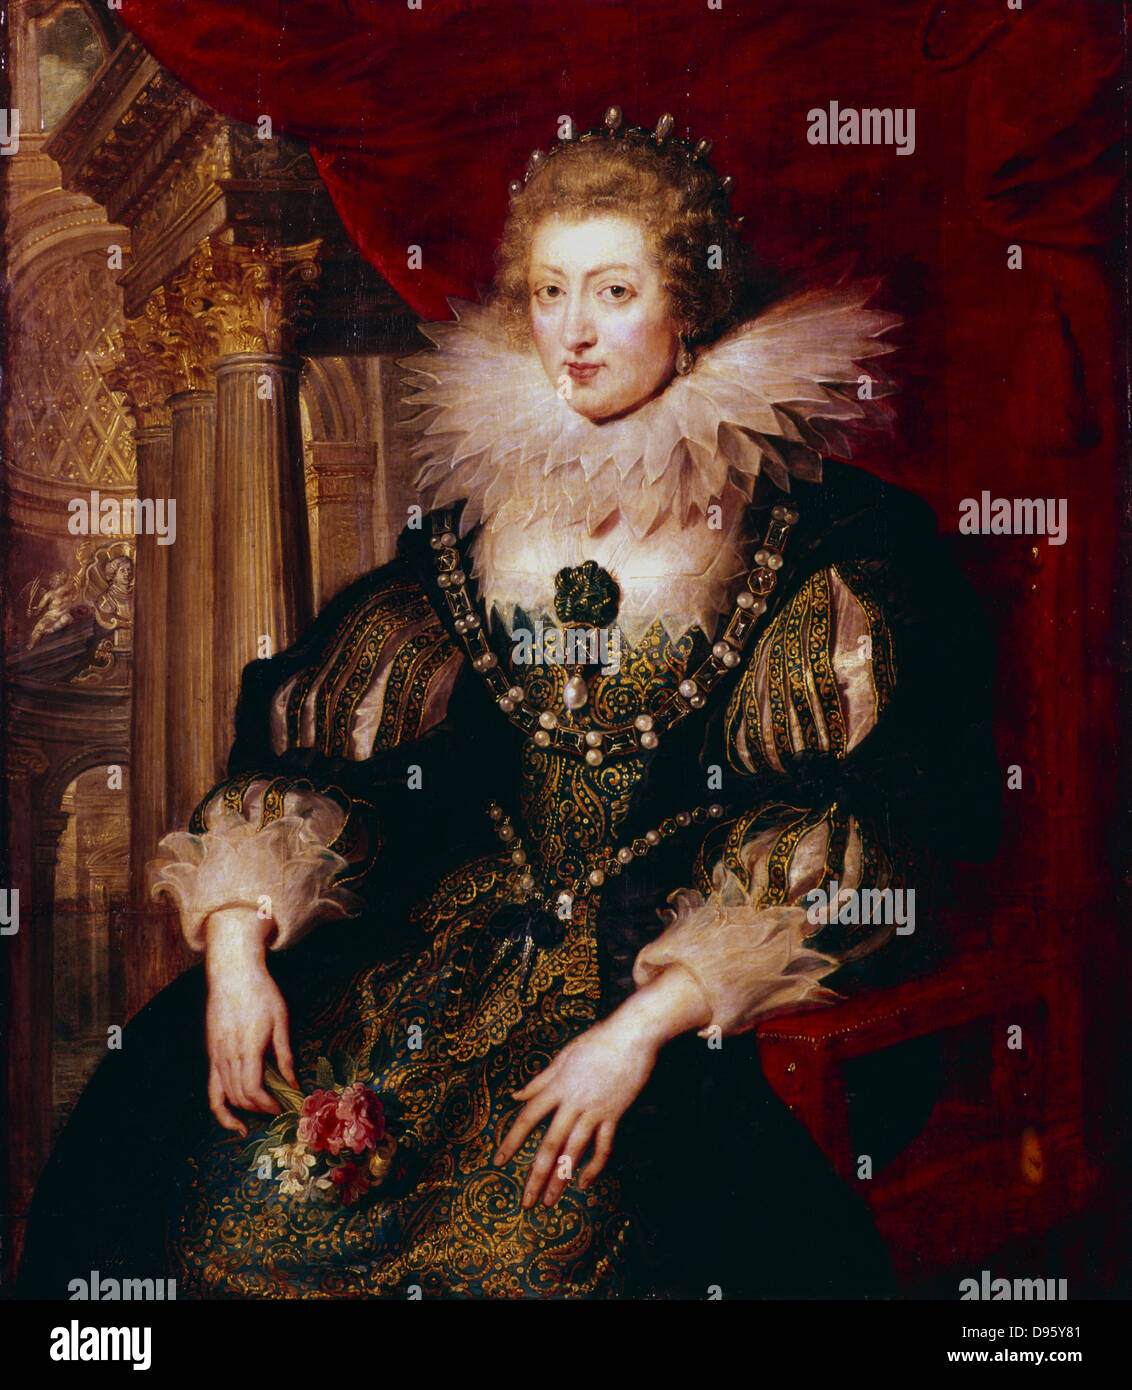 Ana de Austria (1601-1666) se casó con Luis XIII de Francia 1615. Madre de OUI XIV. Peter Paul Rubens (1577-1640), artista flamenco. El Louvre, París. Foto de stock